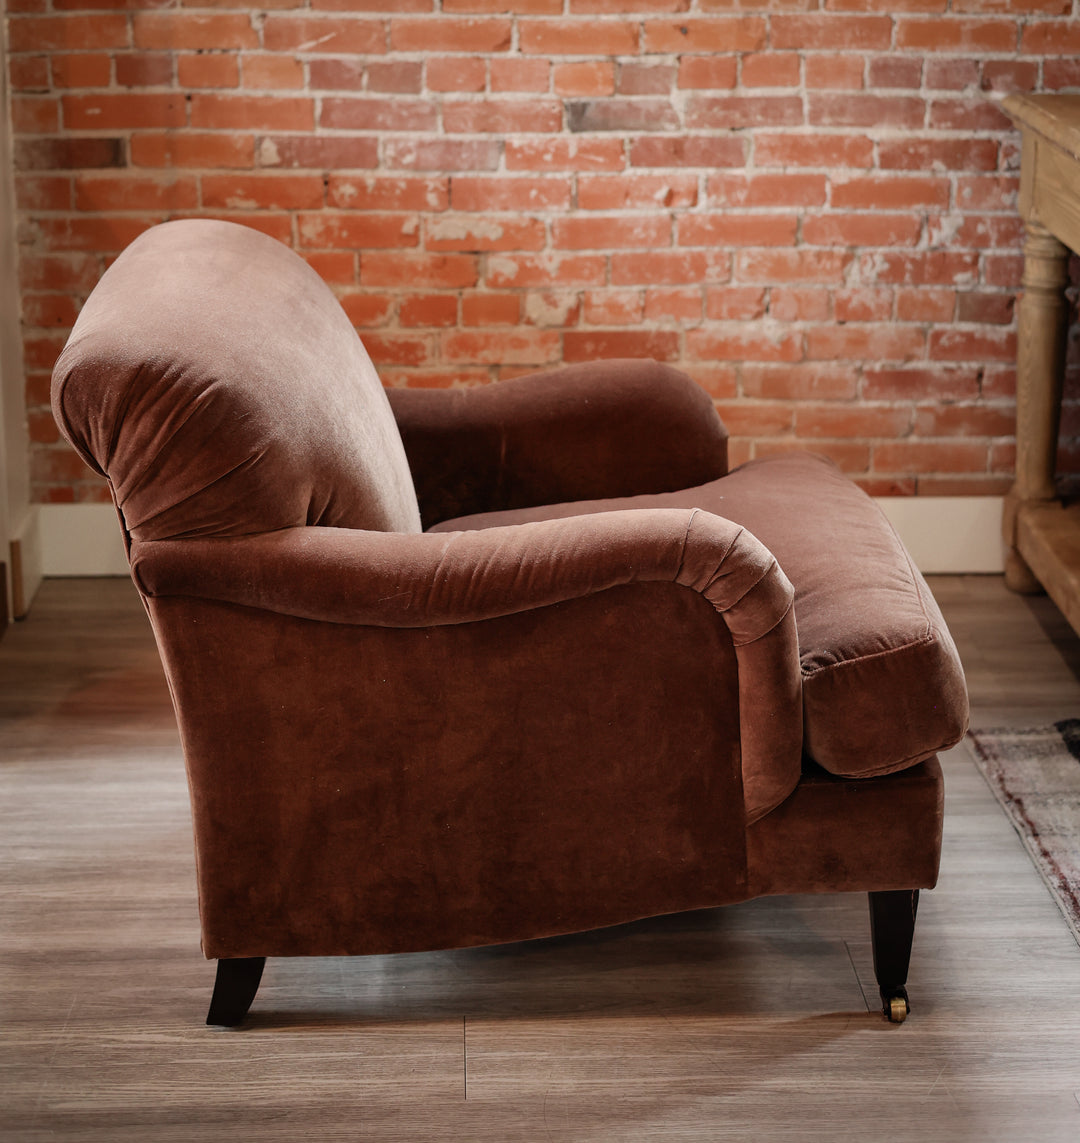 Brampton Chair - Showroom Model